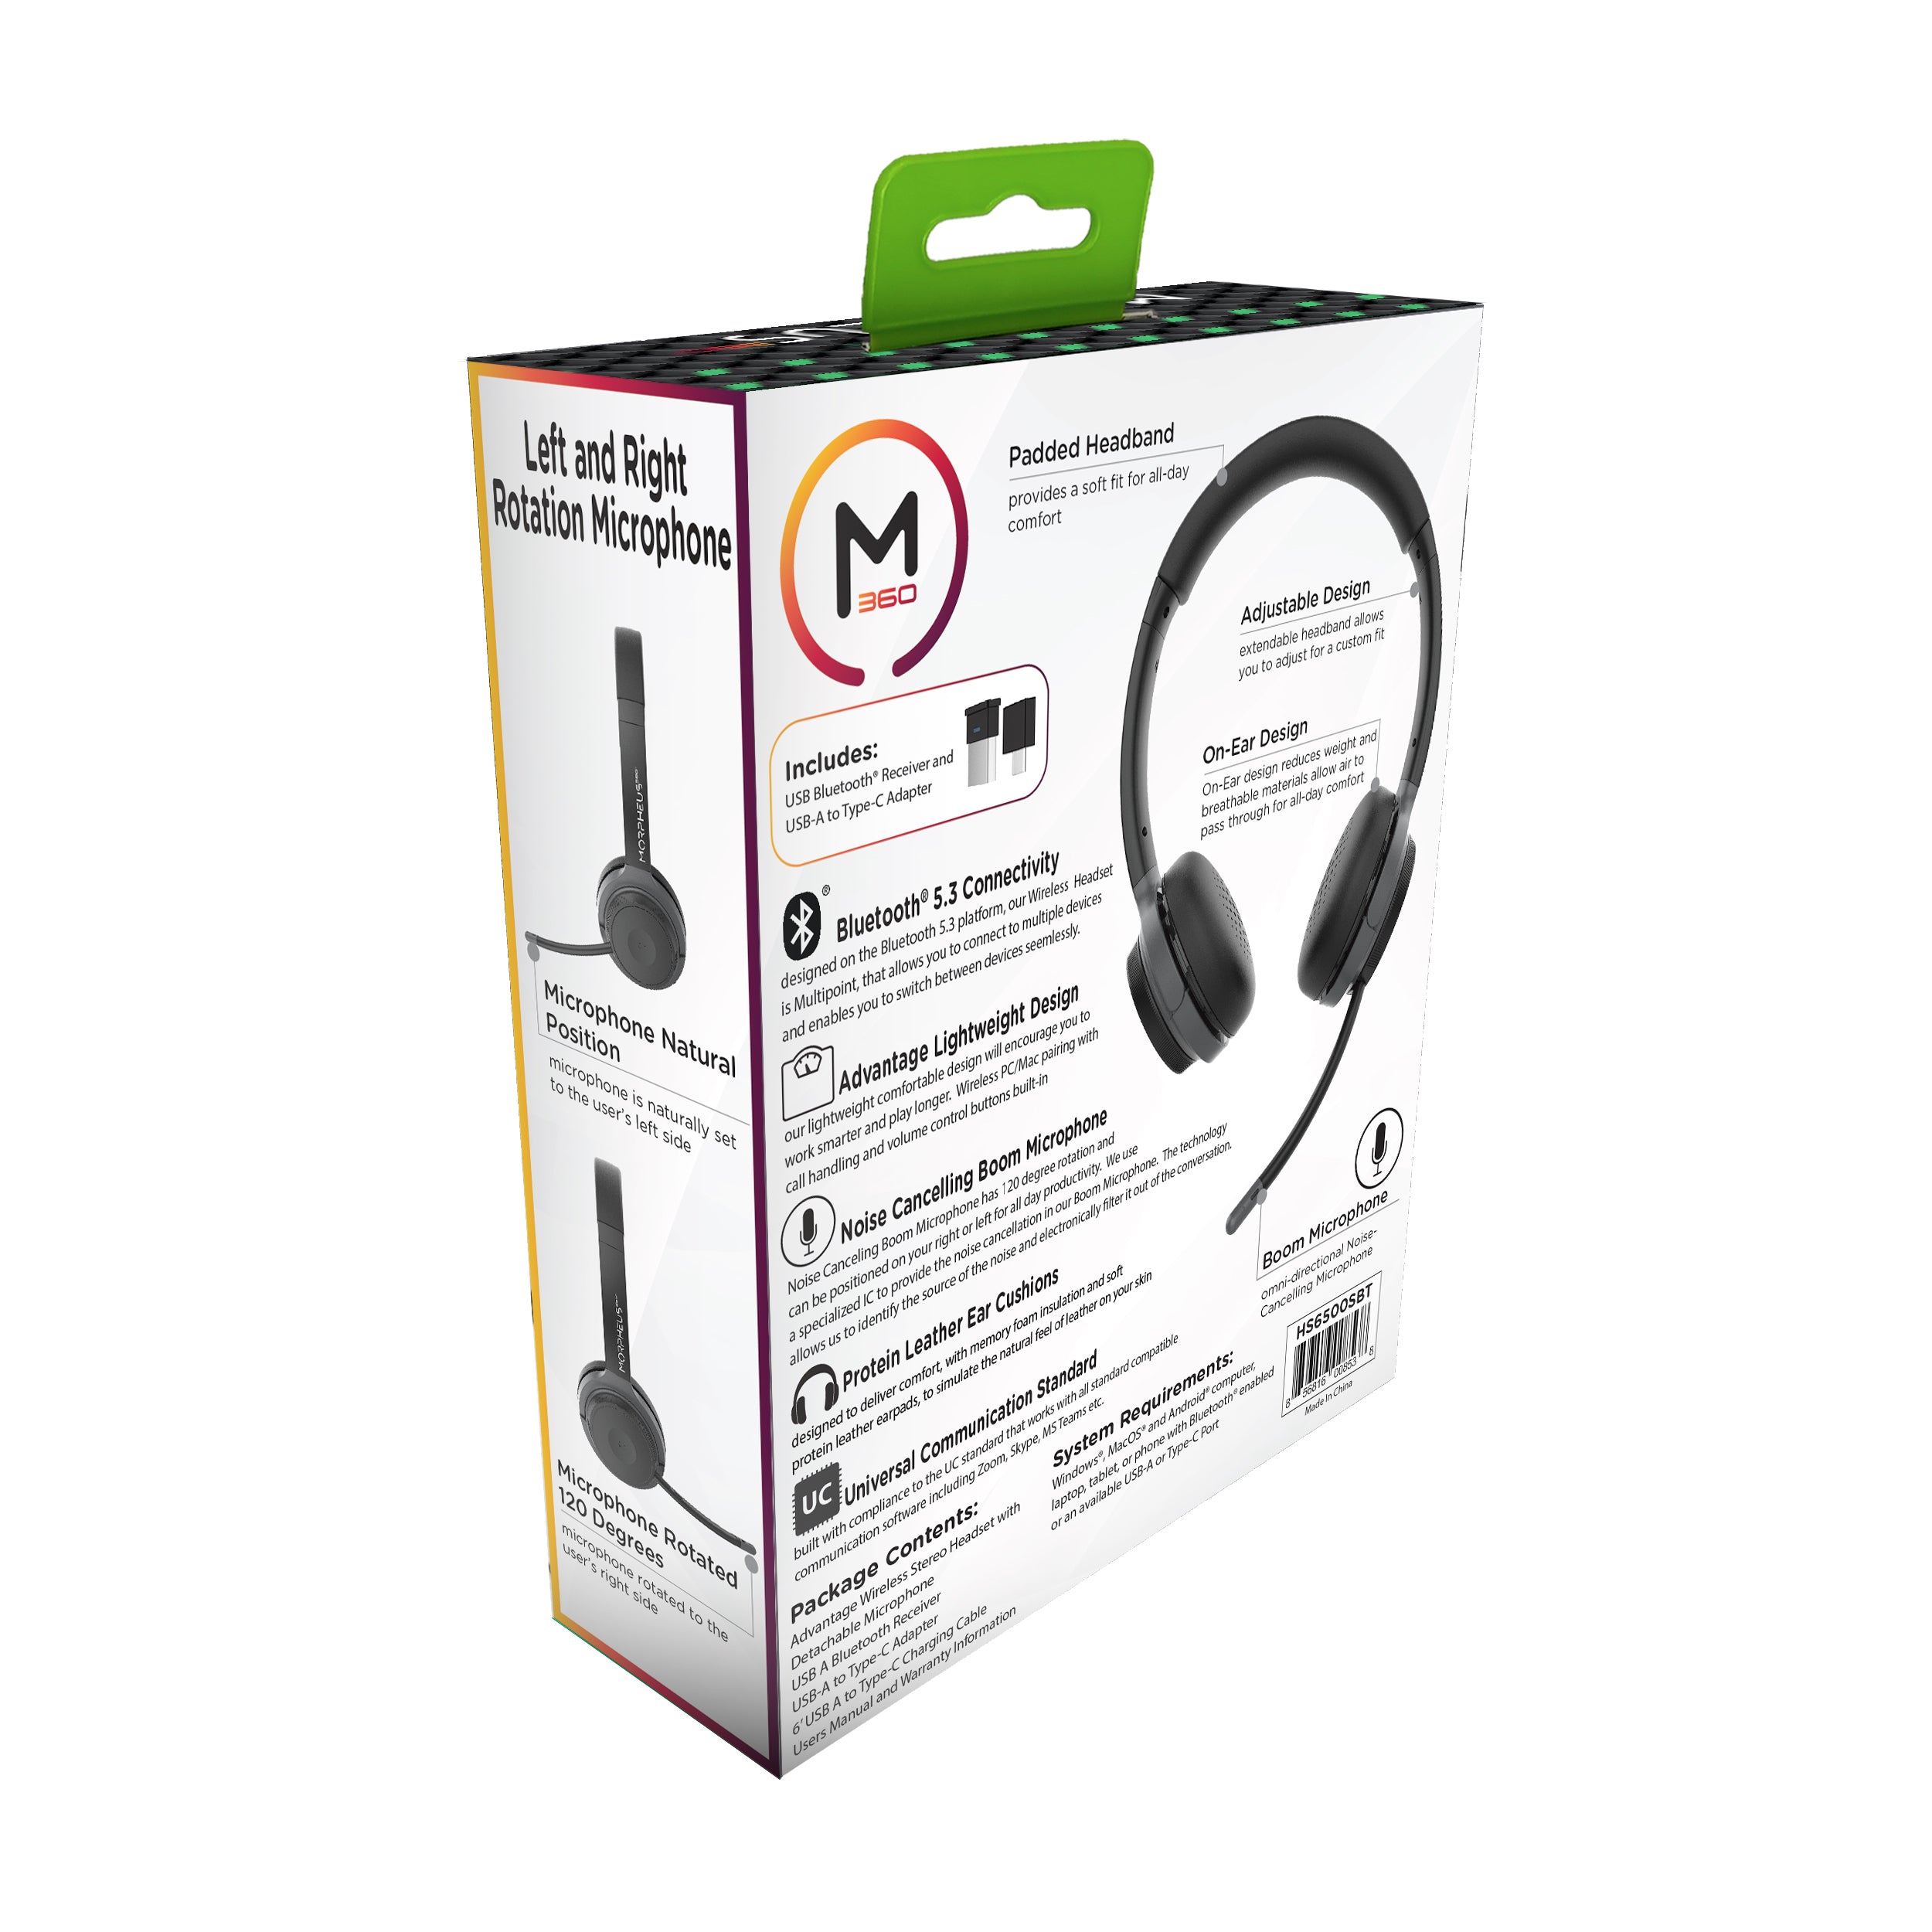 Morpheus 360 Advantage Stereo Wireless Headset with Detachable